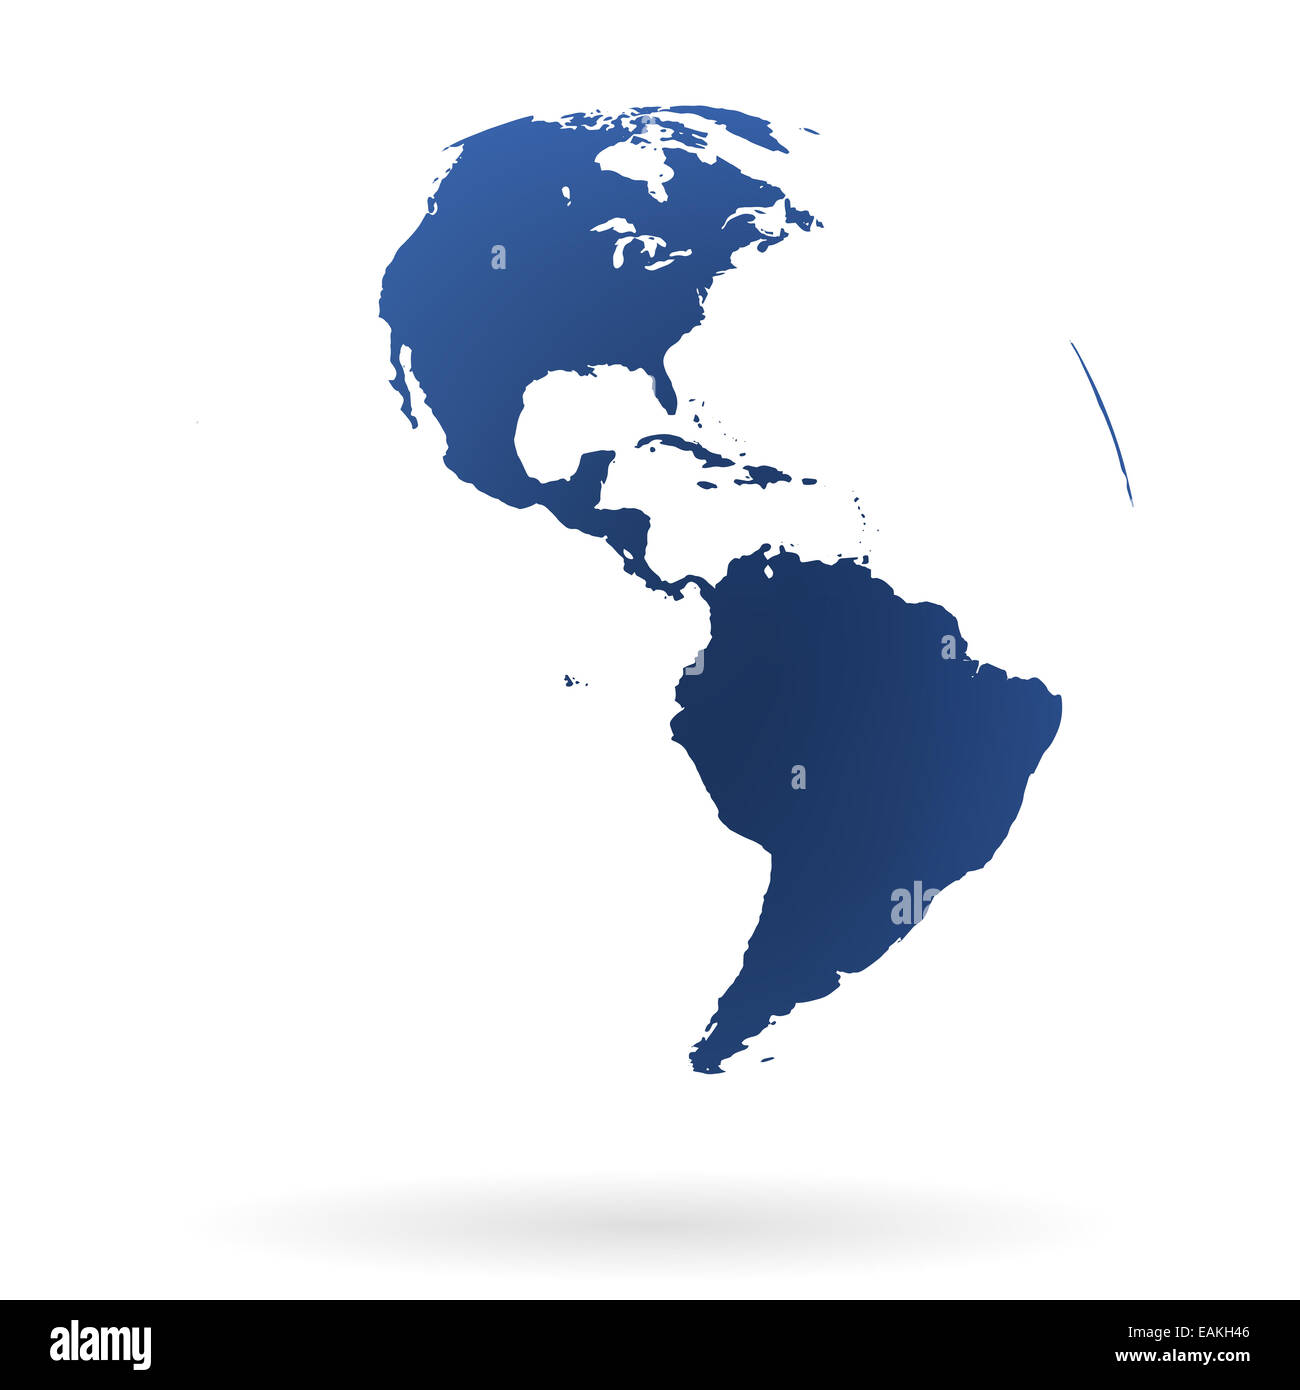 Earth globe Stock Photo